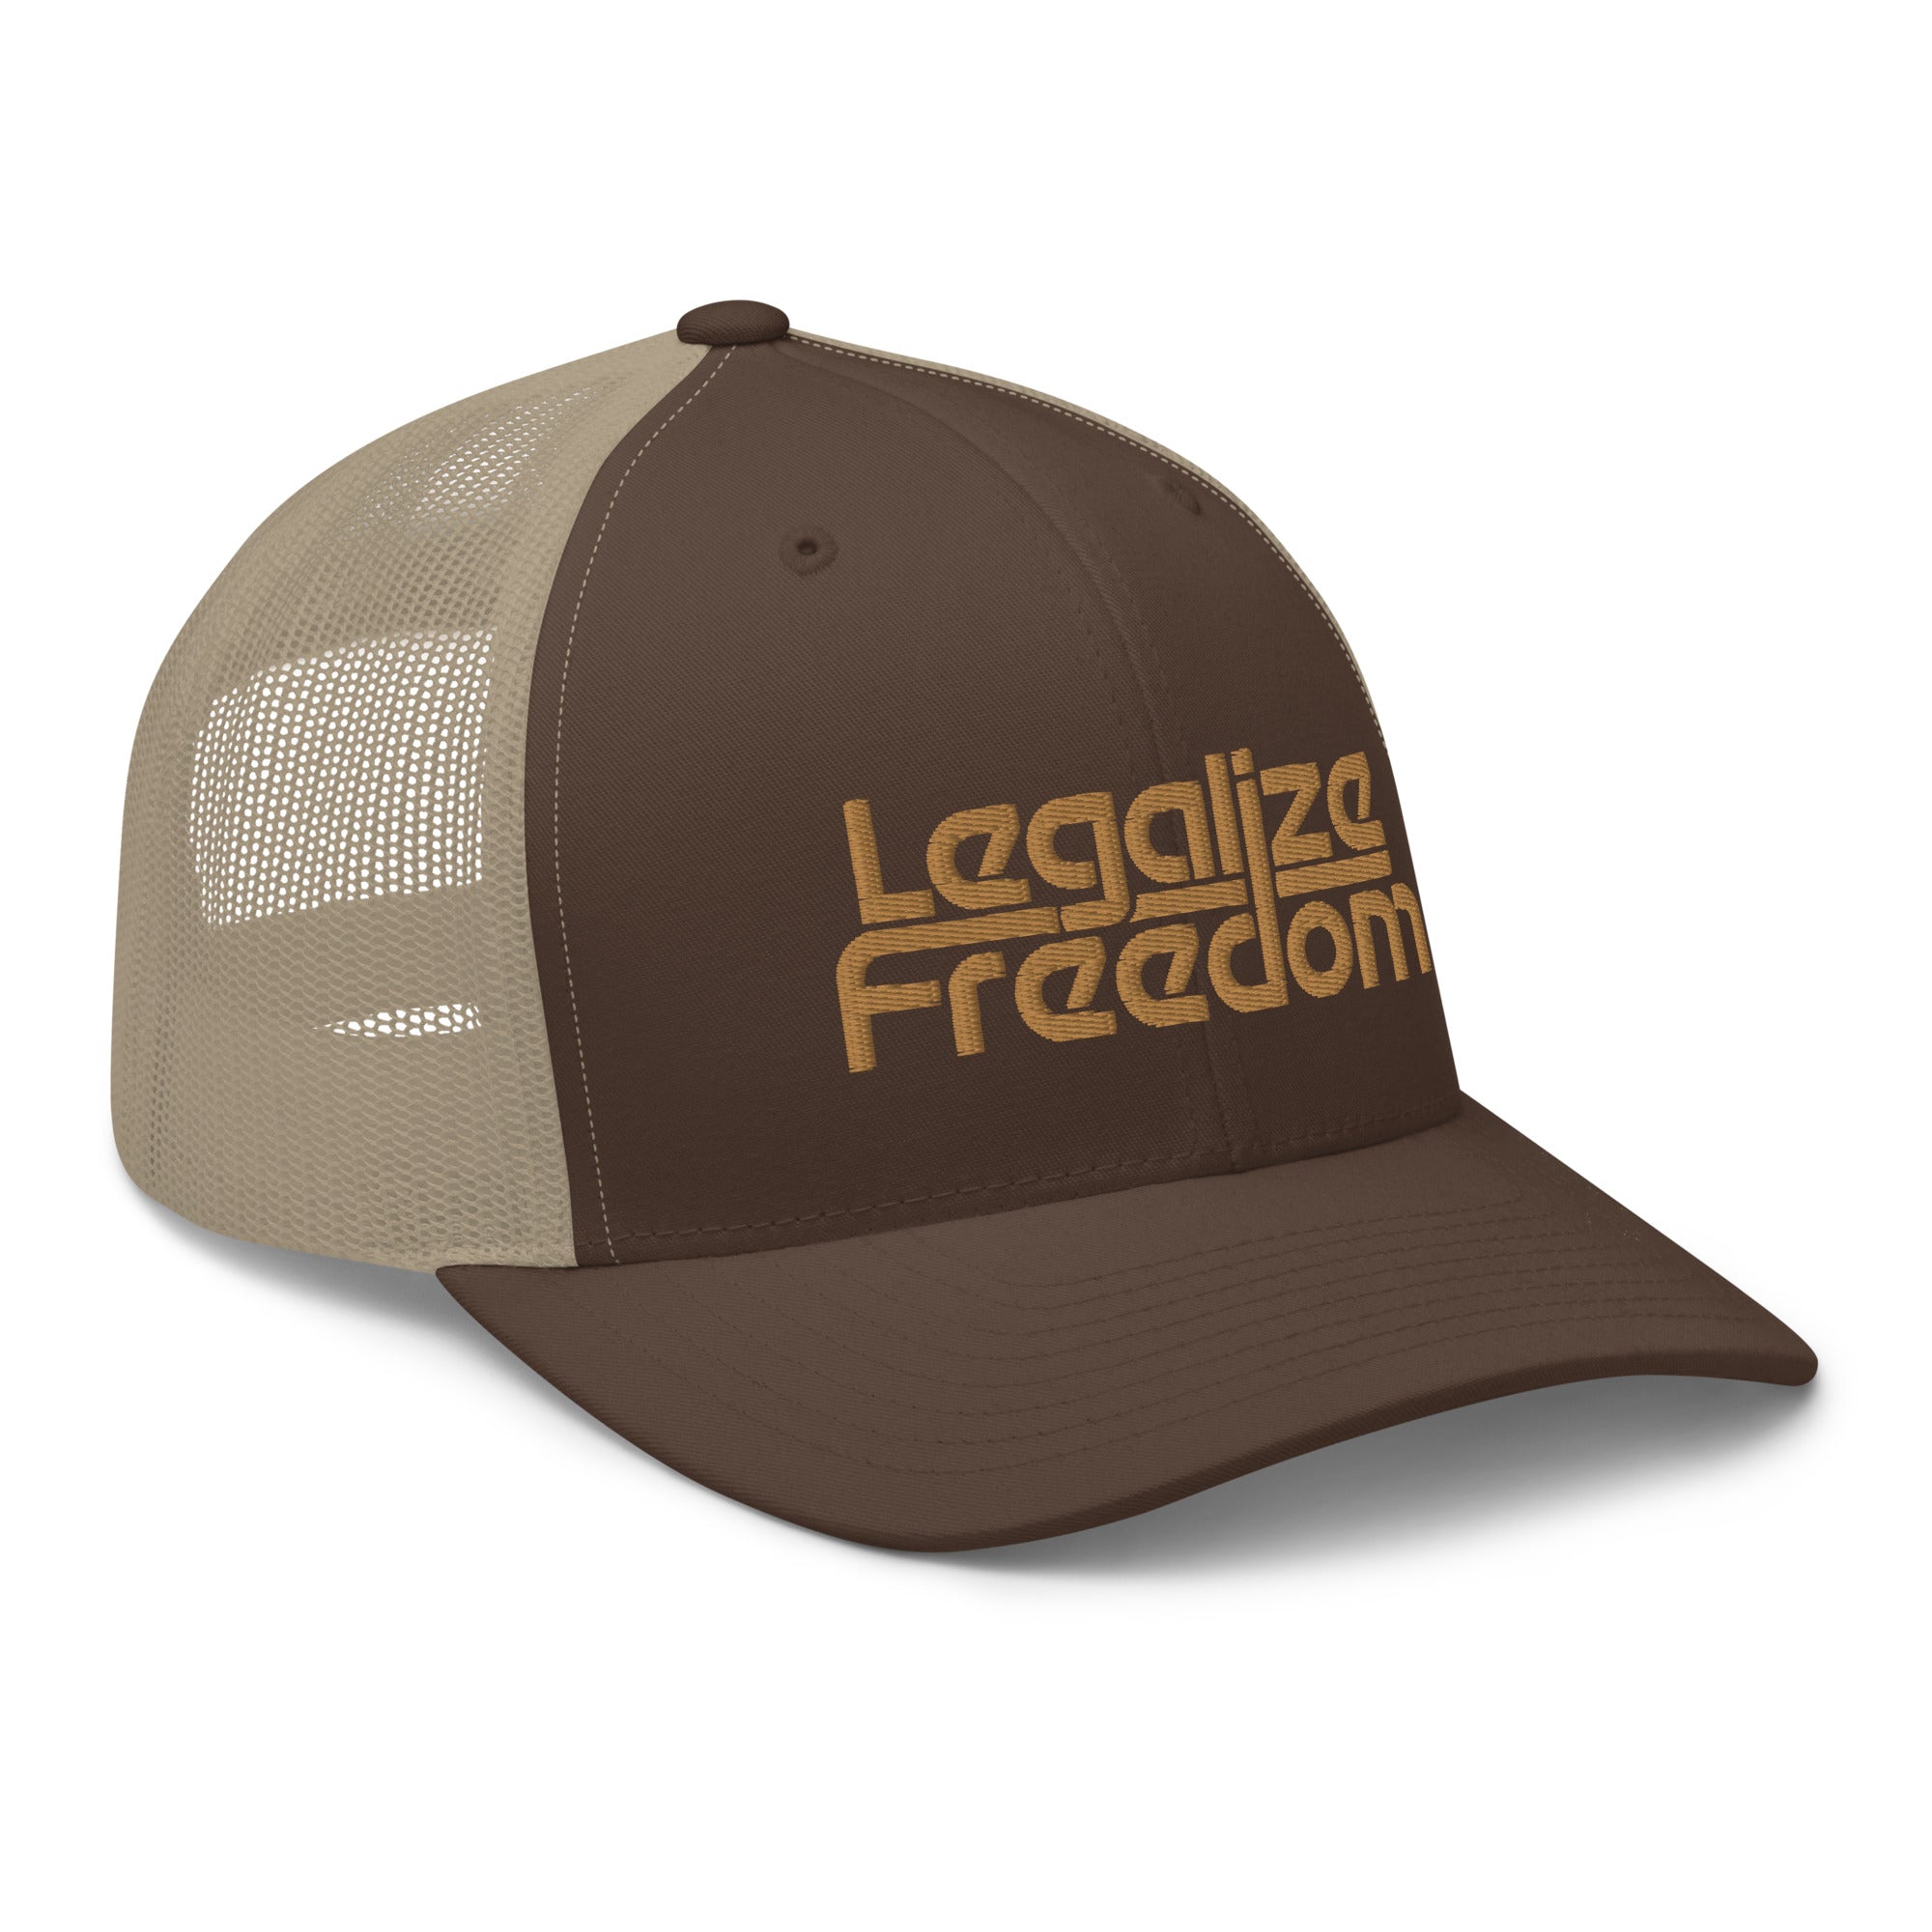 Legalize Freedom Retro Trucker Cap